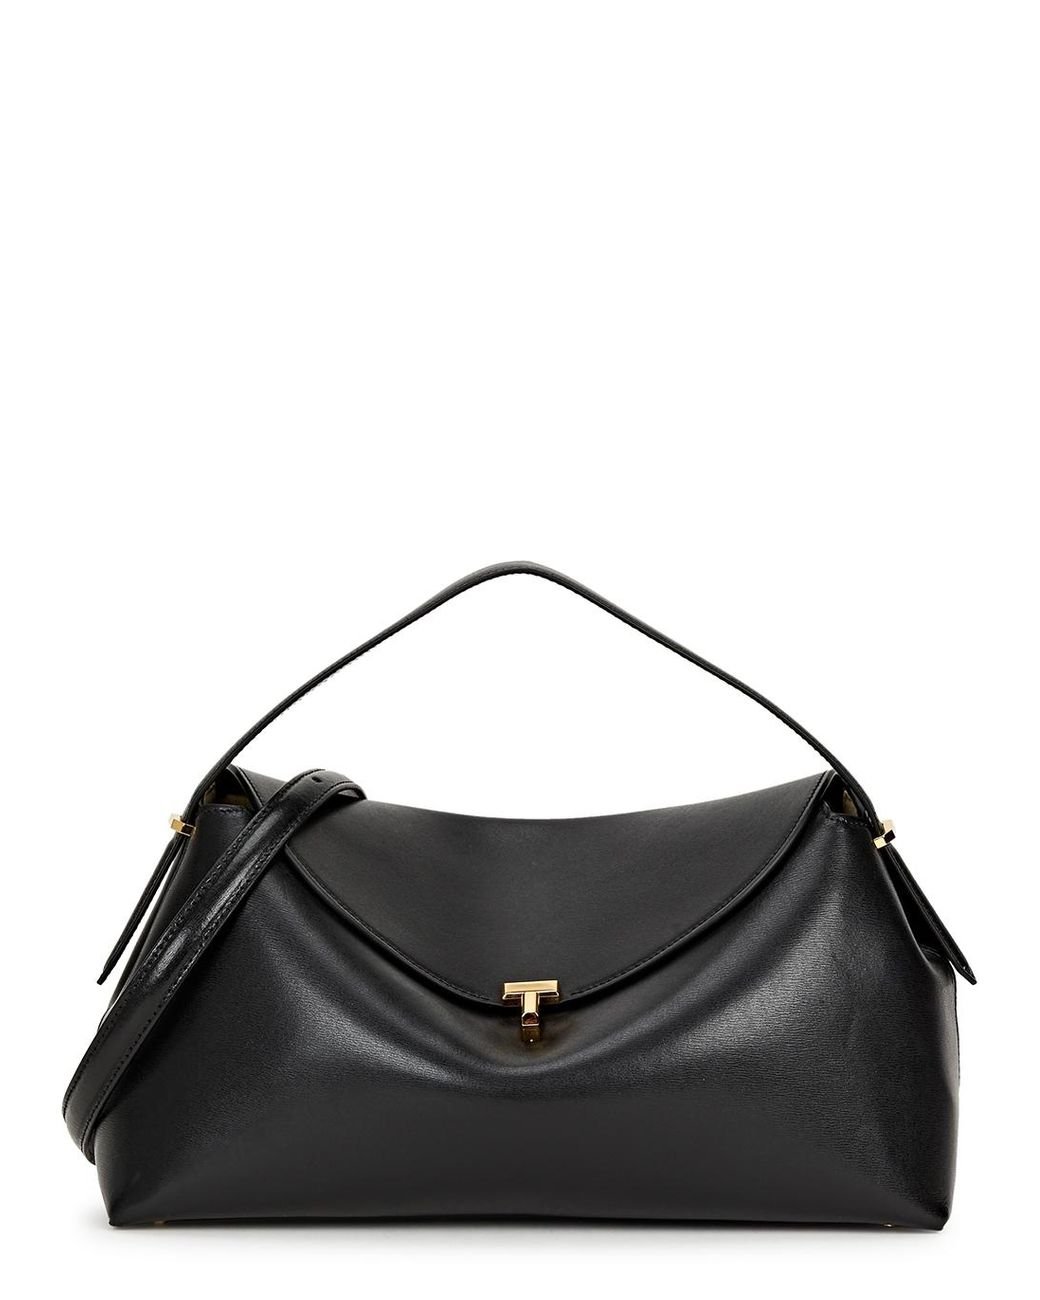 Totême Leather Top Handle Bag in Black | Lyst UK